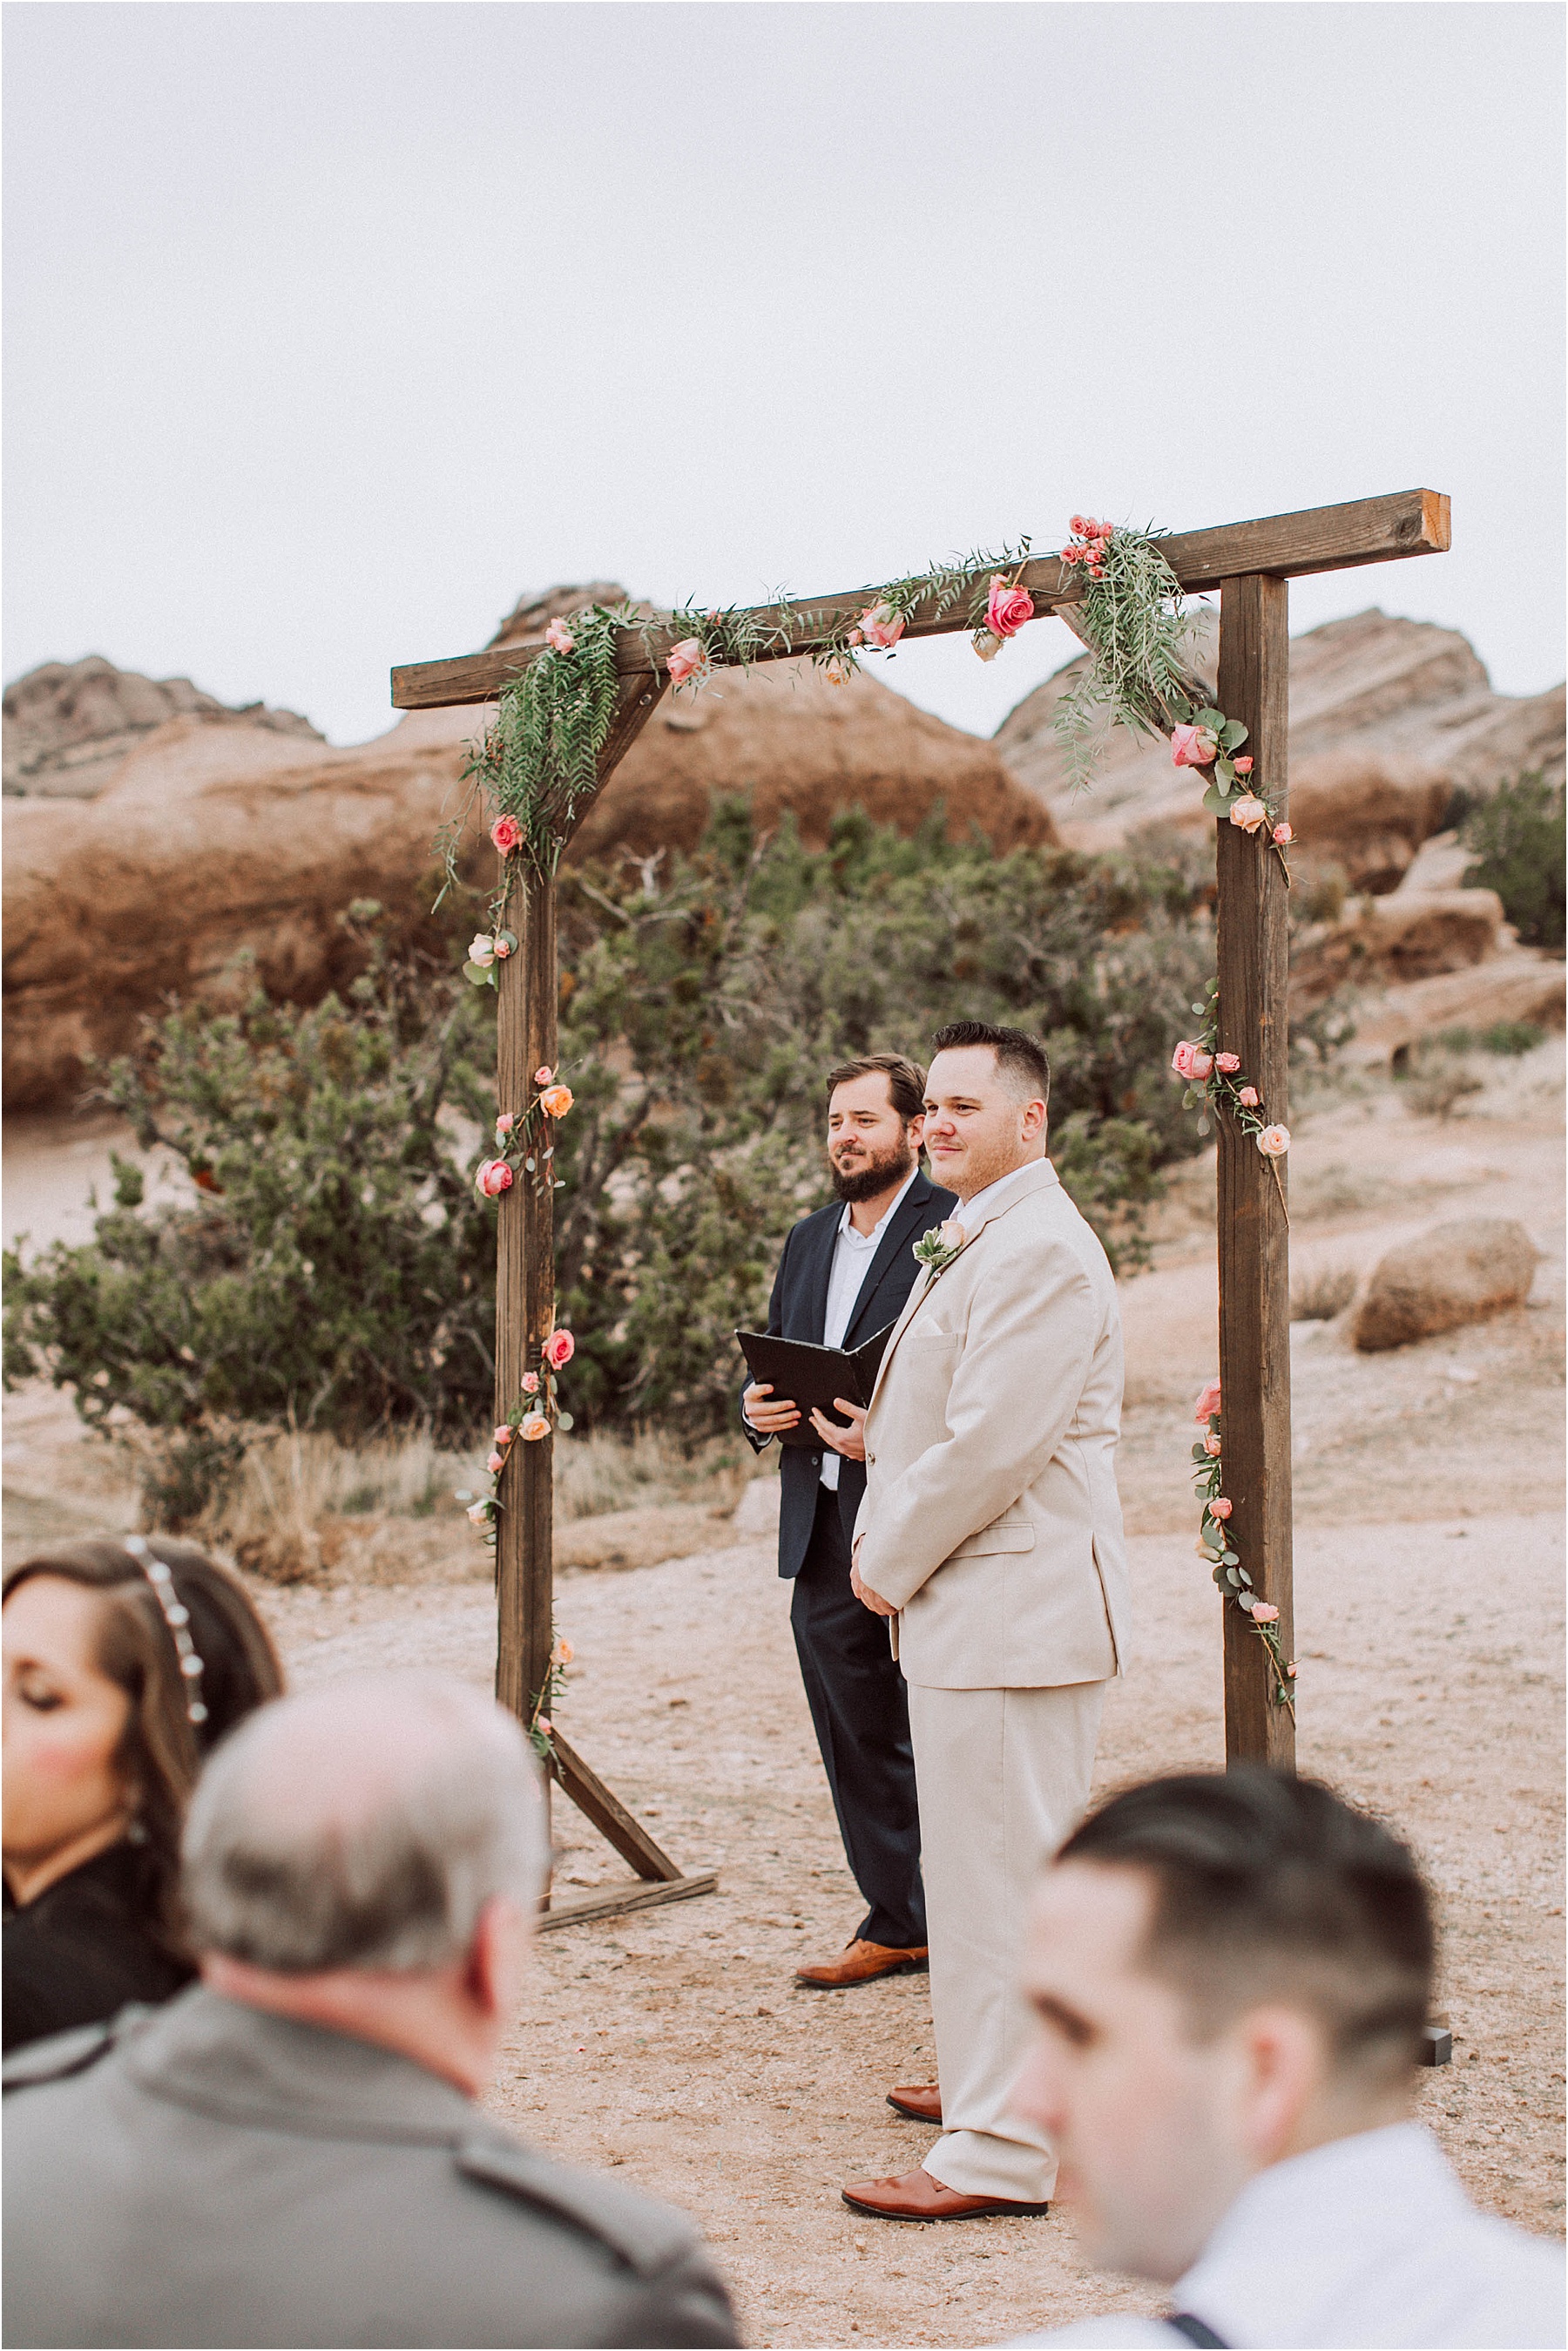 Vasquez Rocks Intimate Wedding & Elopement Photography - Ceremony Coverage